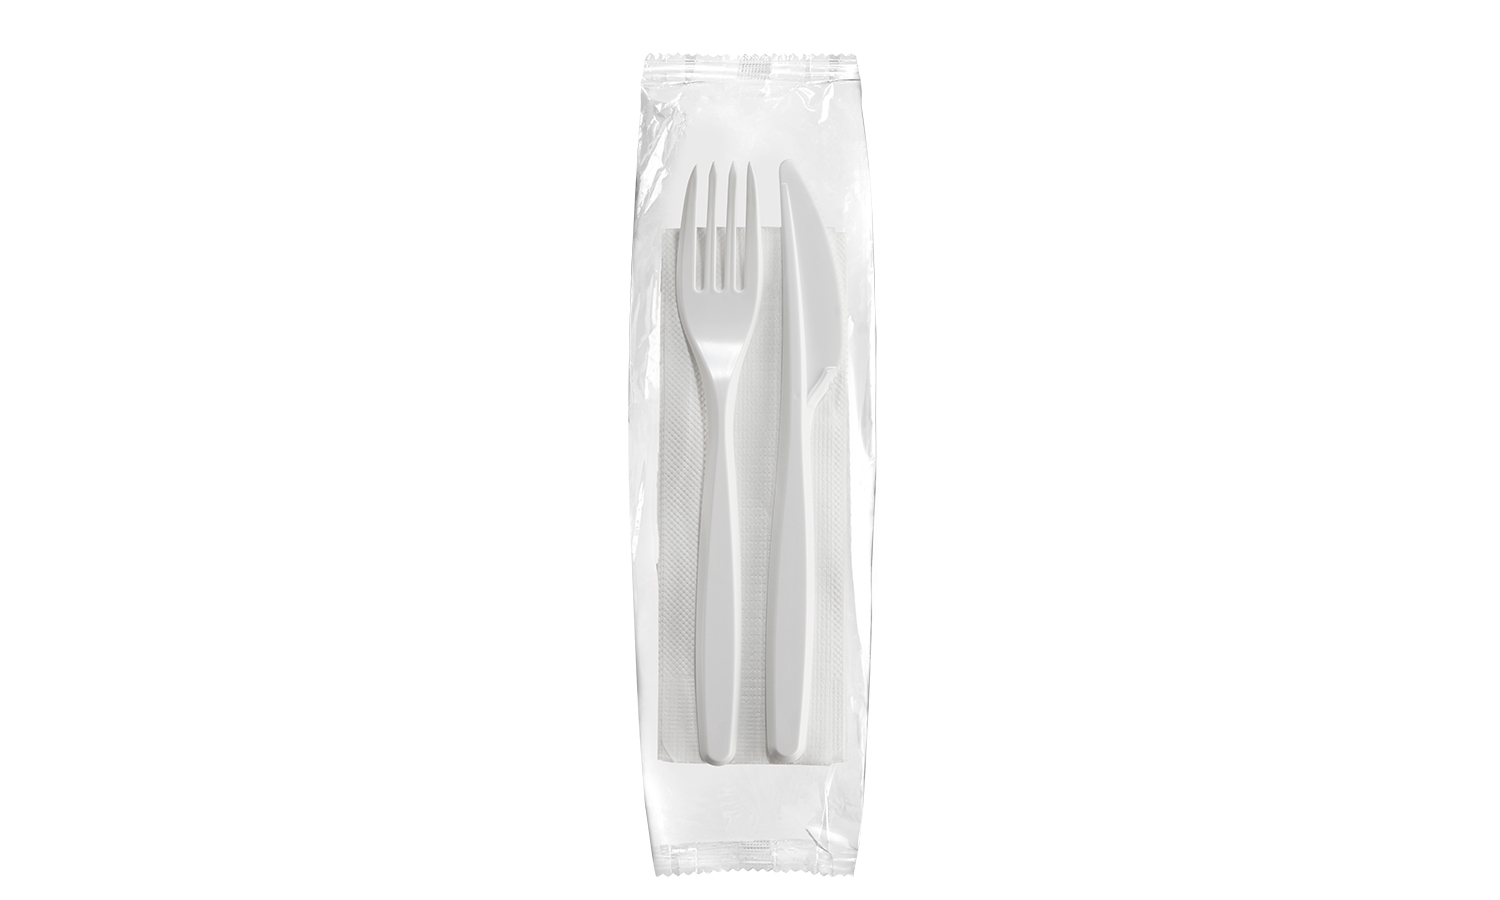 Darnel Cutlery Set - Napkin, Fork, Knife, Soup Spoon and Spoon